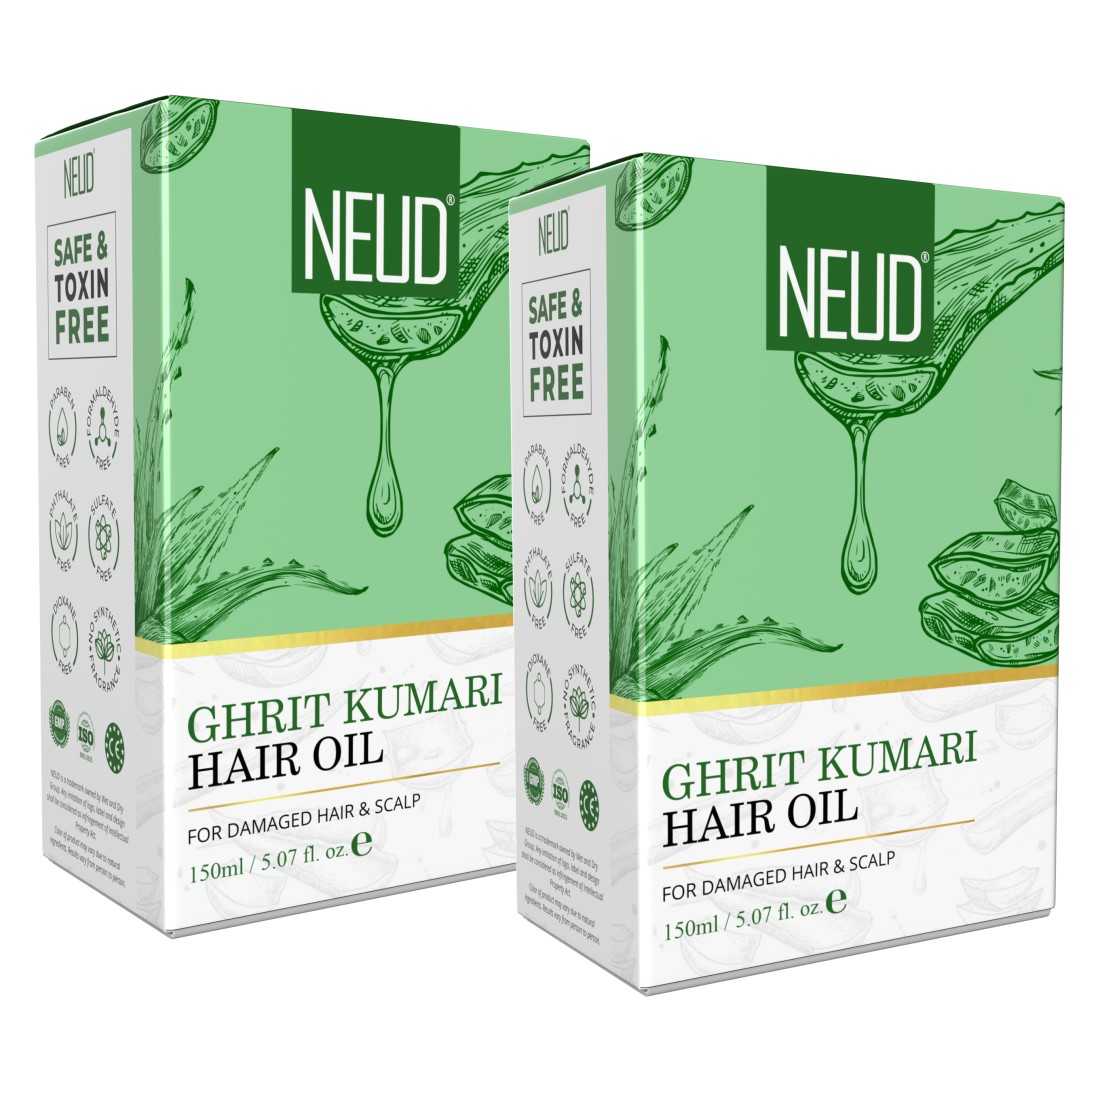 NEUD Premium Ghrit Kumari Hair Oil for Men & Women